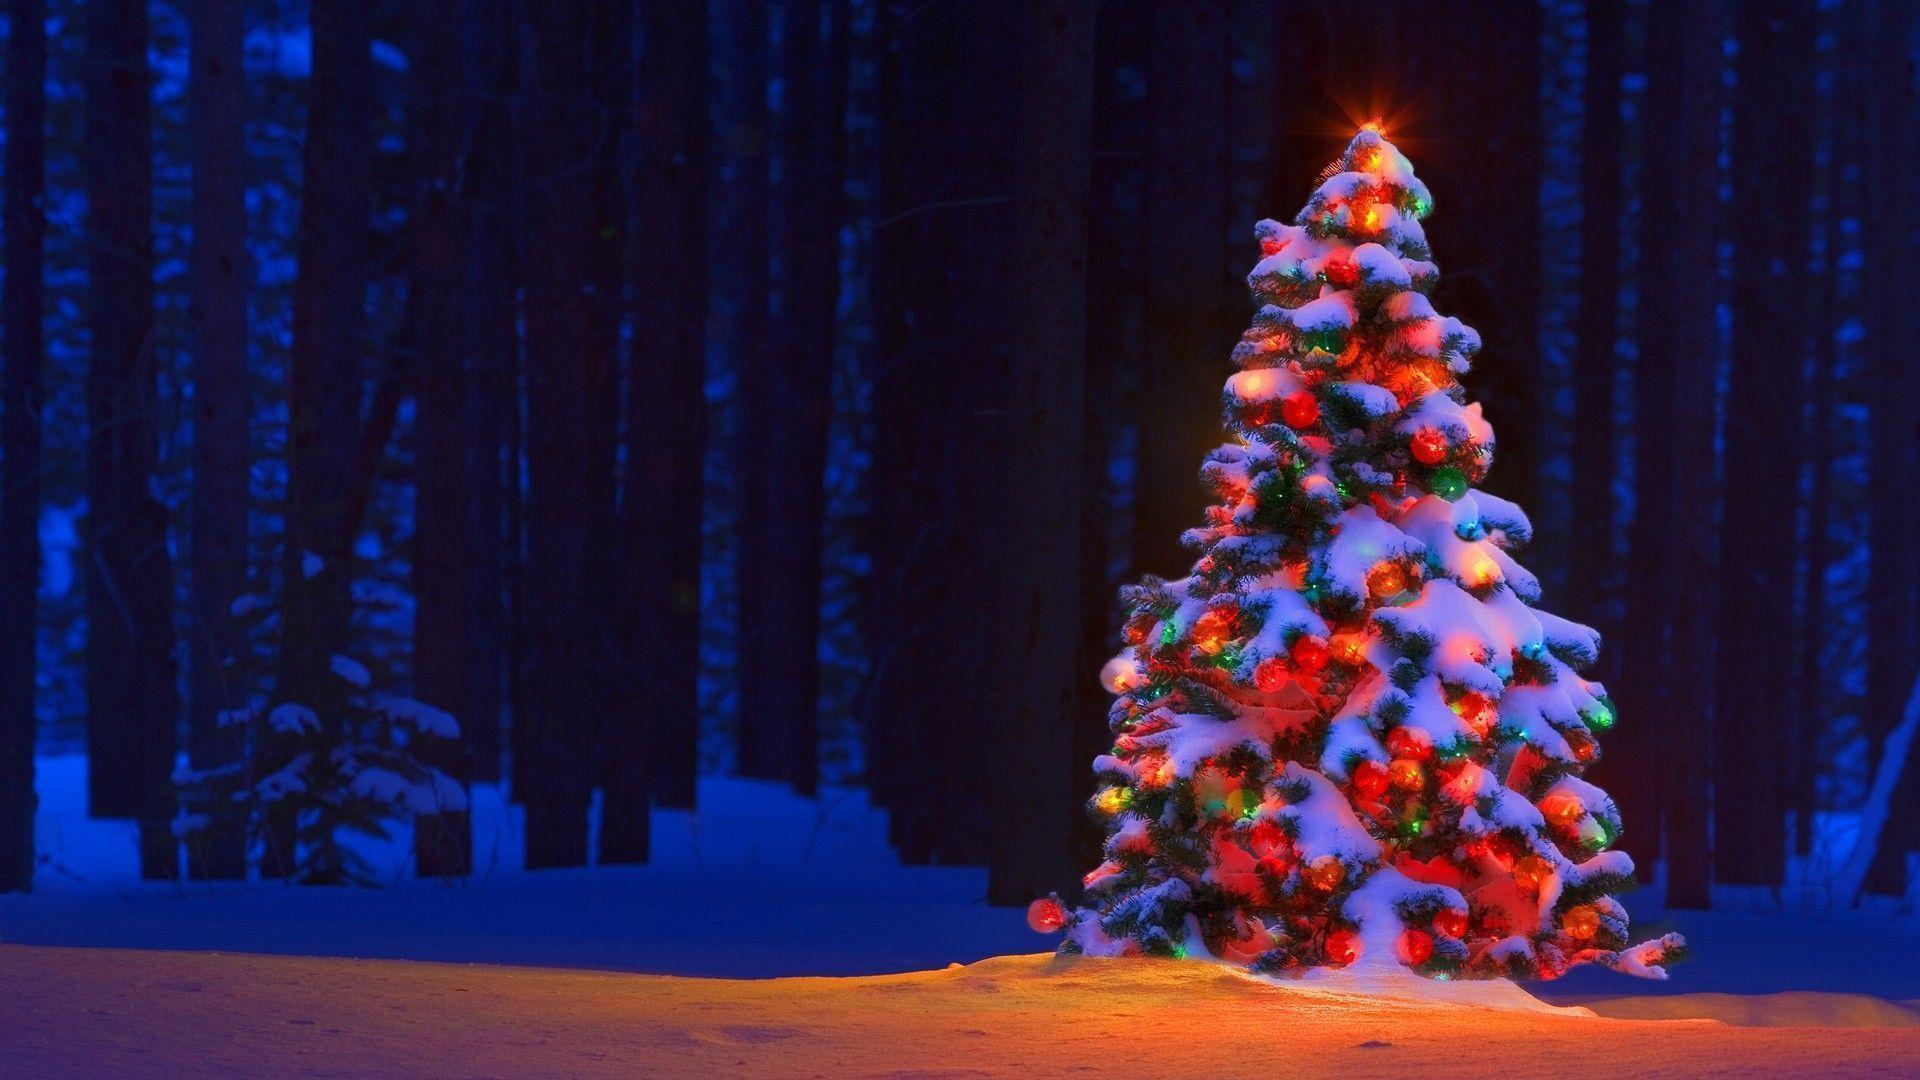 wallpaper christmas tree decorations lights ideas 2014